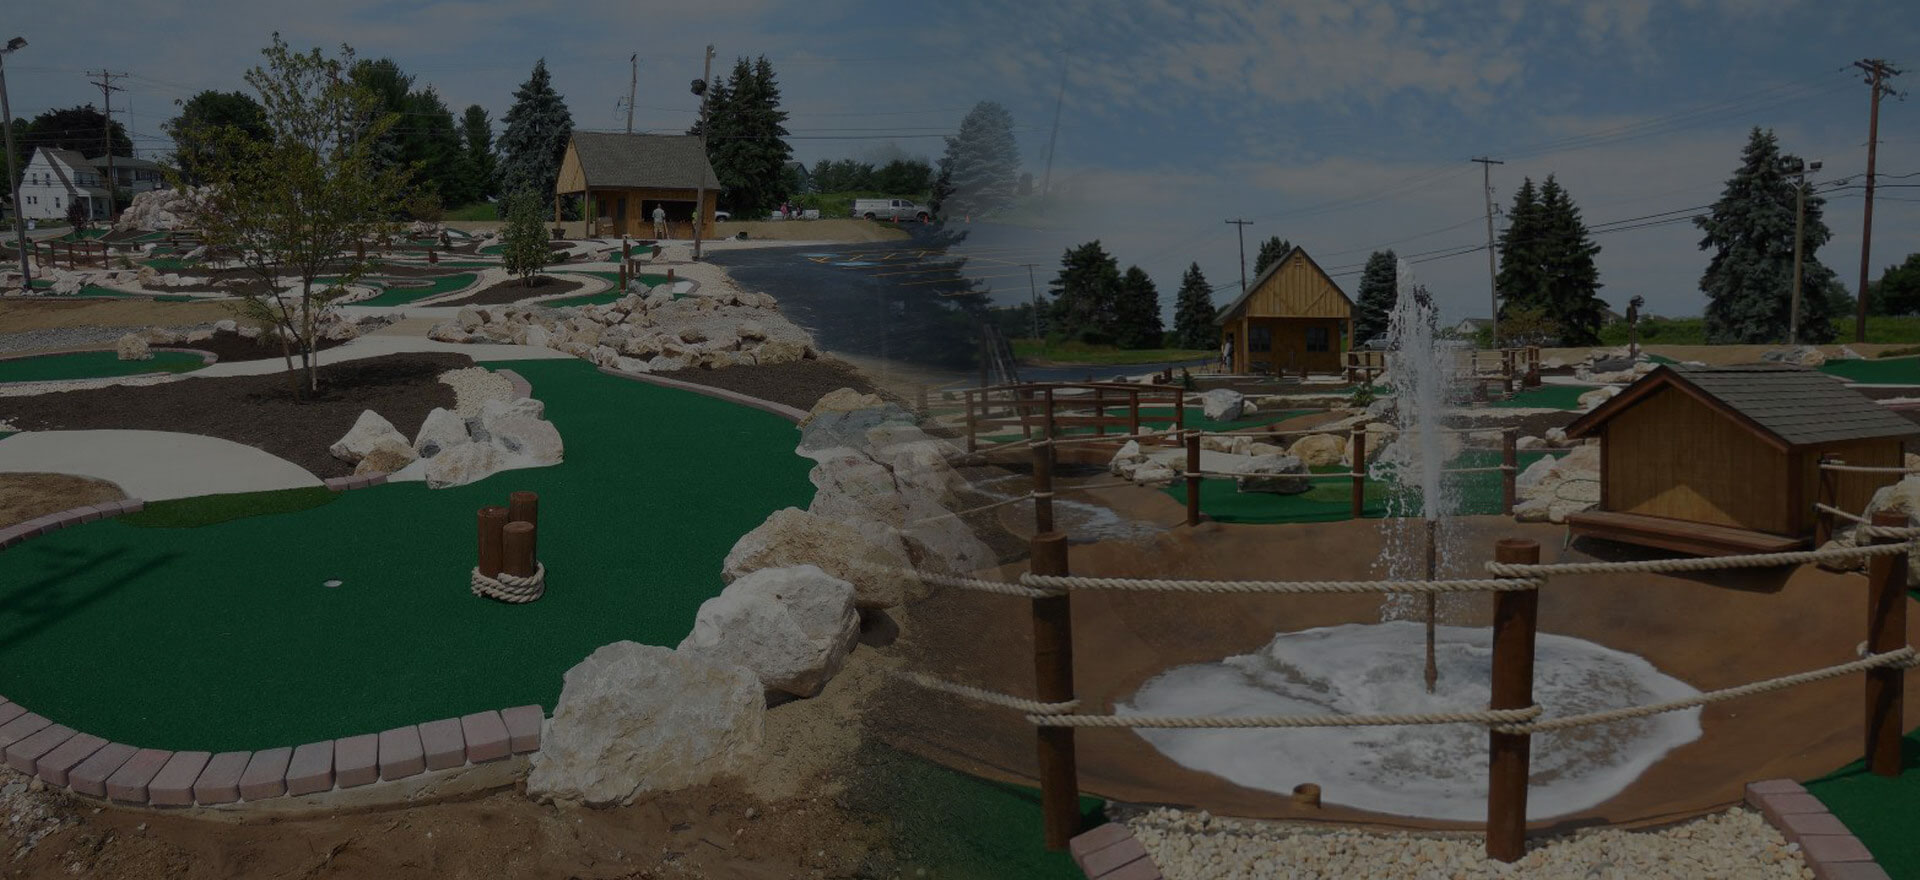 Home Miniature Golf Course Builder Horwath Golf